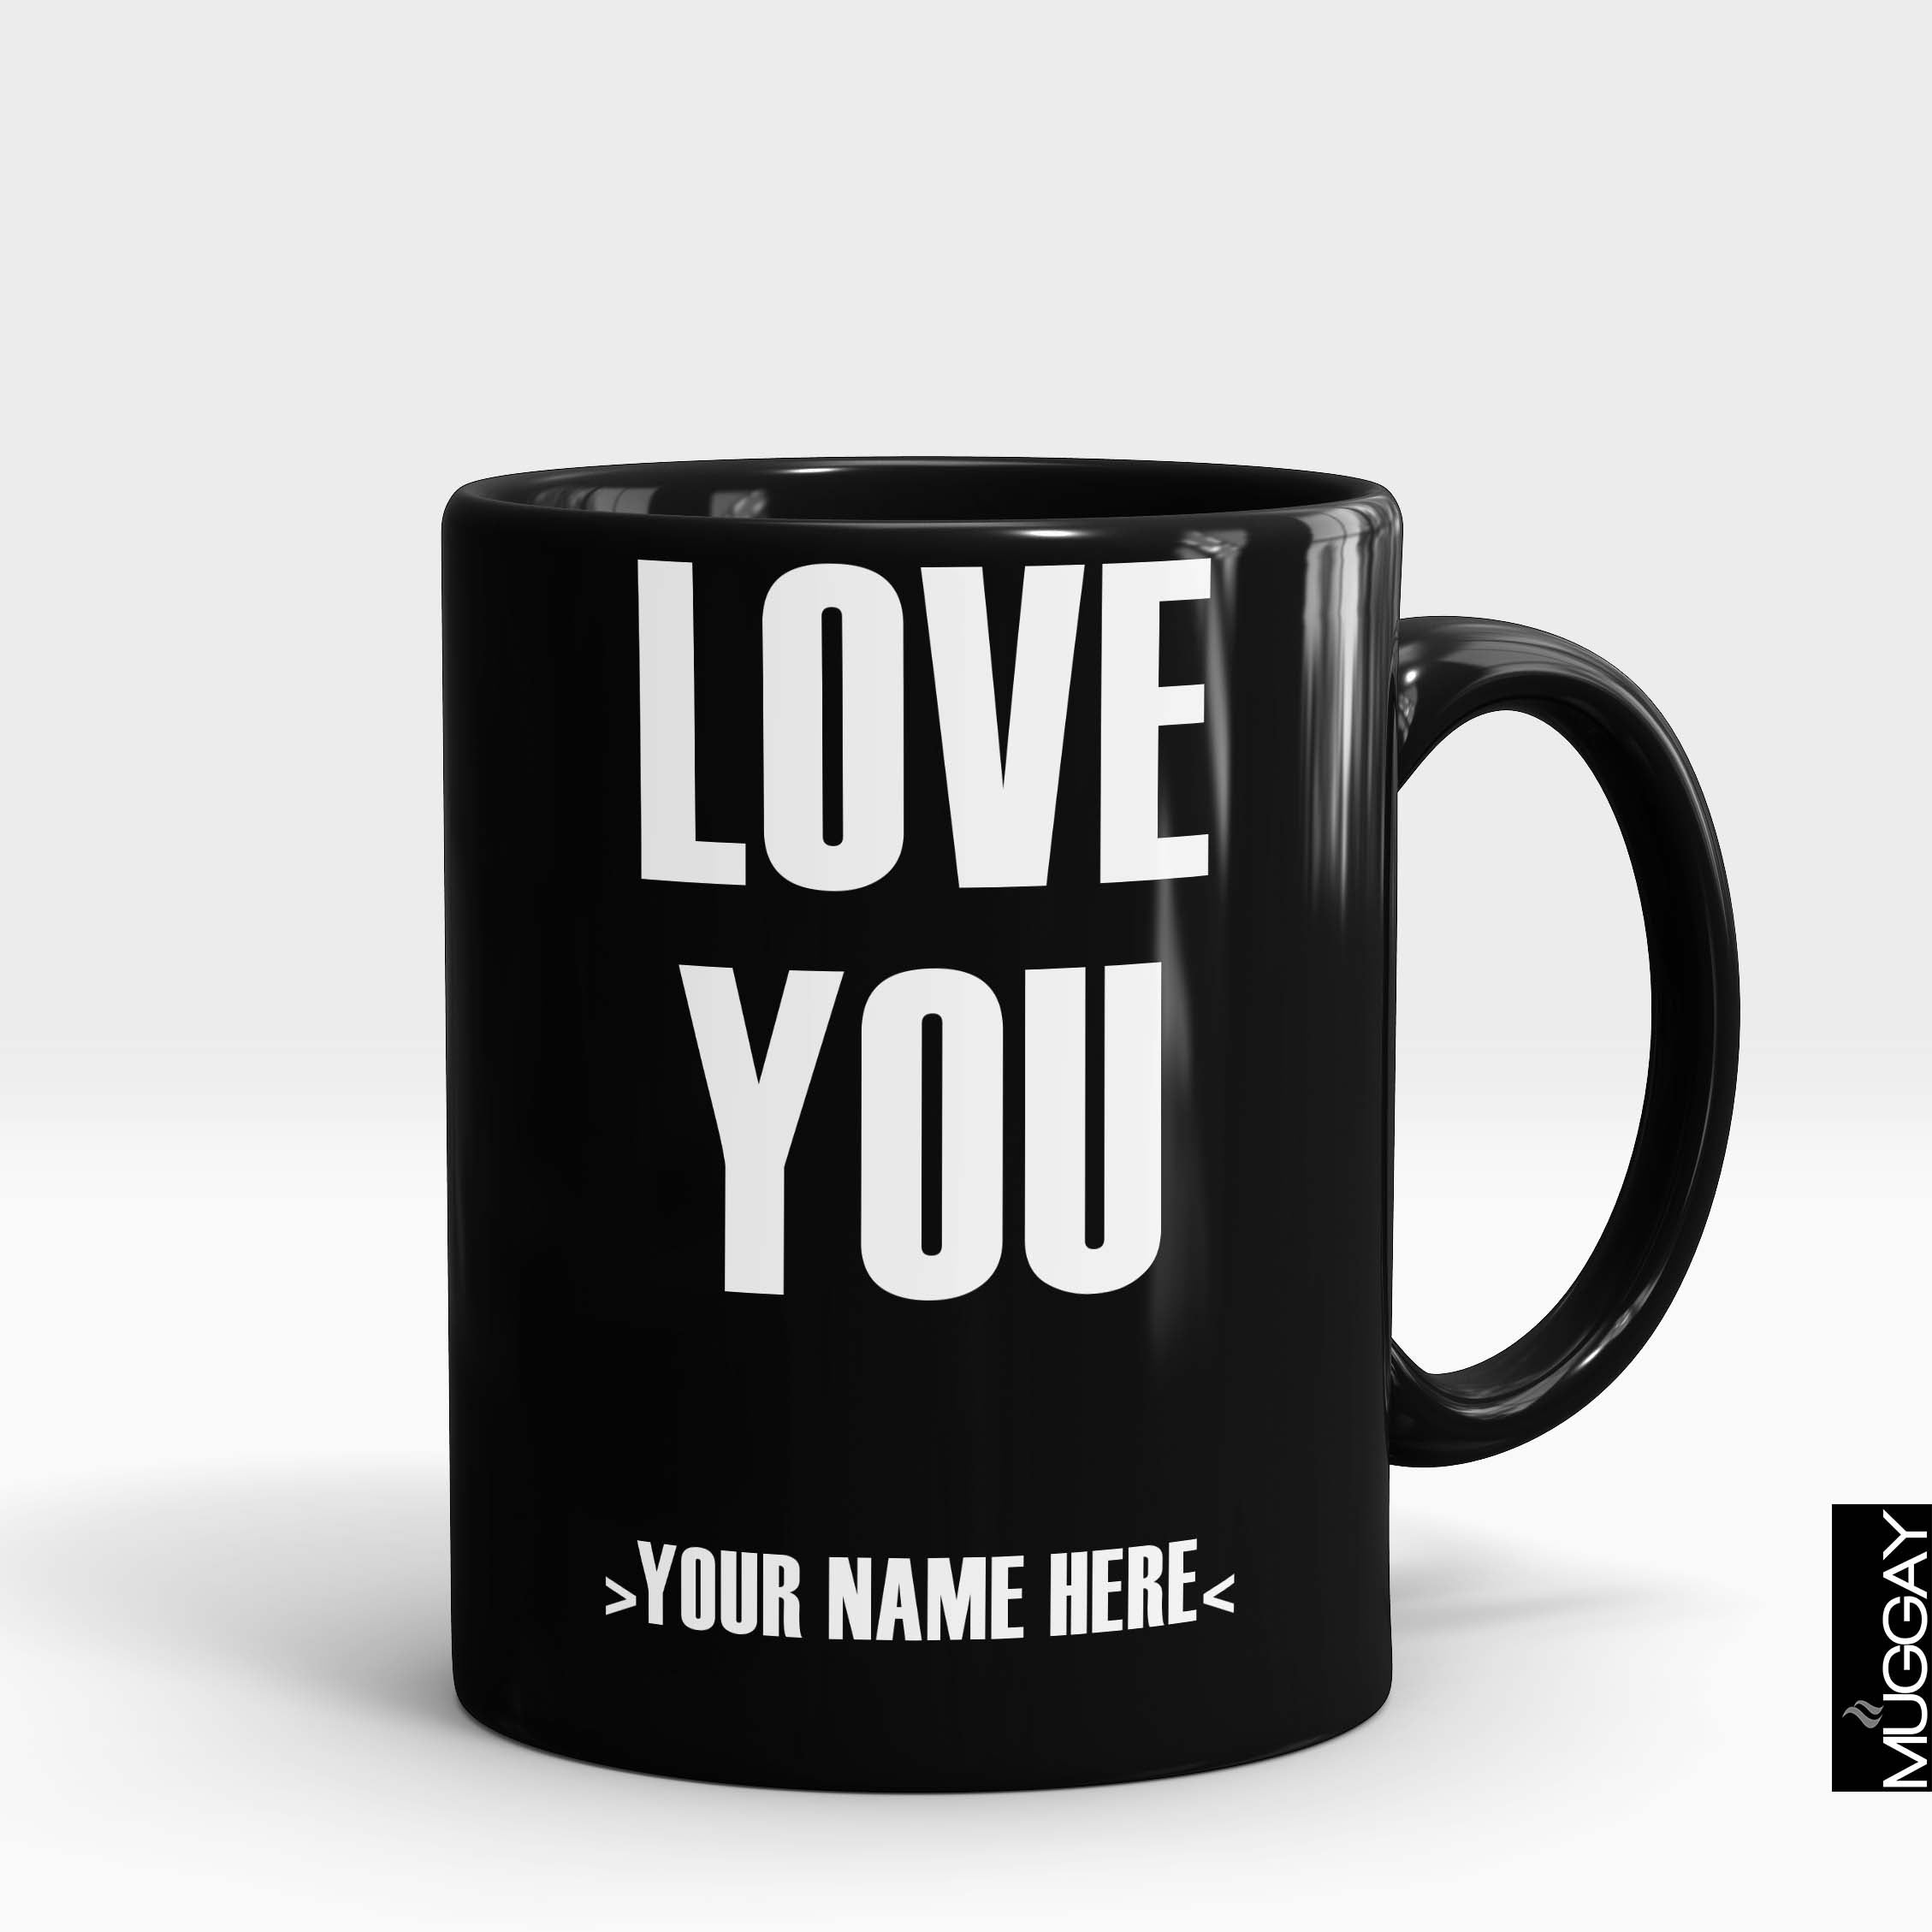 Love you Magic mug with Customized Name